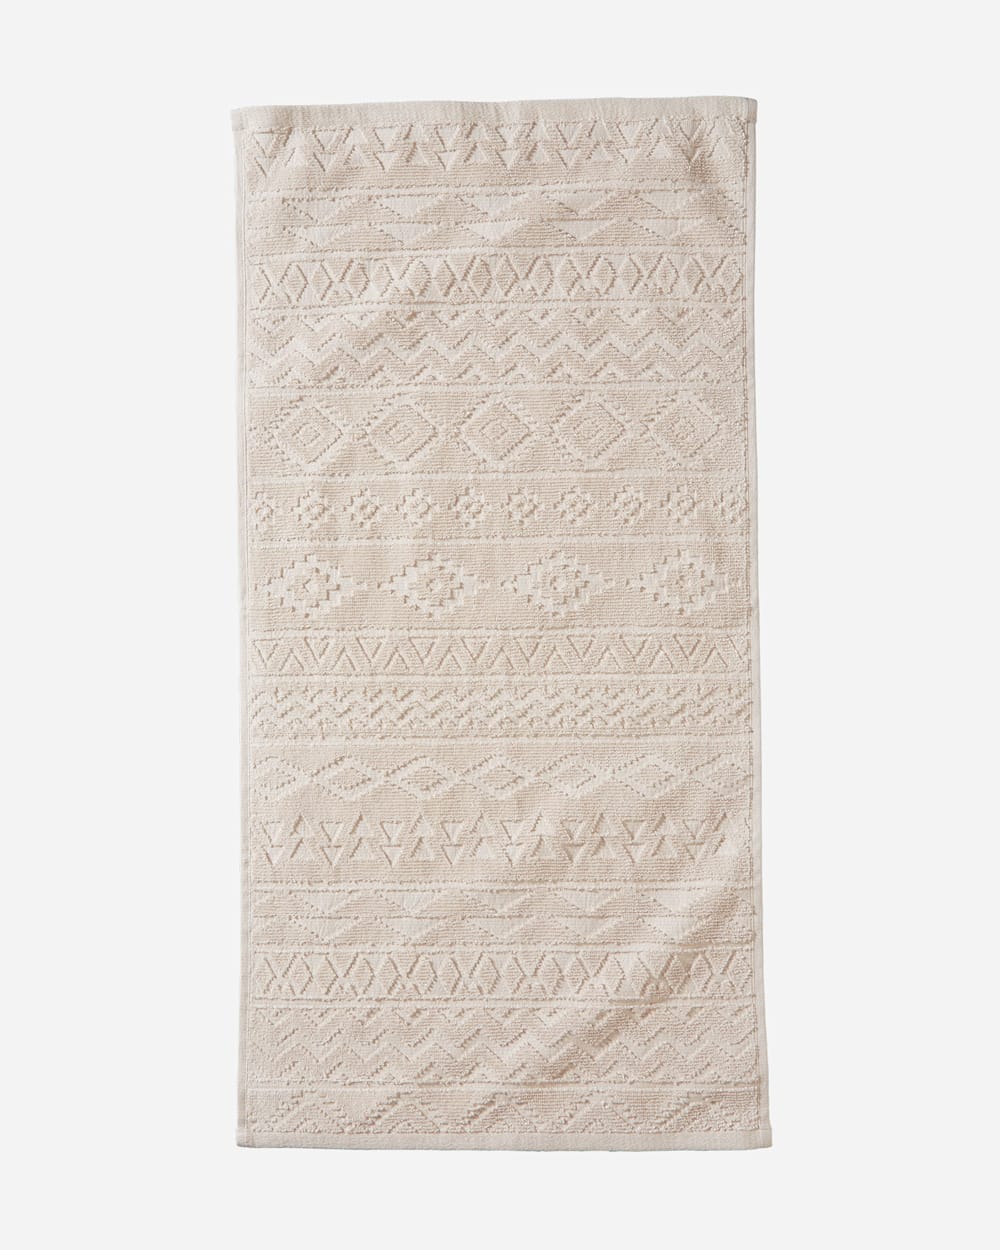 ALTERNATE VIEW OF SANDIA STRIPE TOWEL SET IN SANDSHELL image number 2